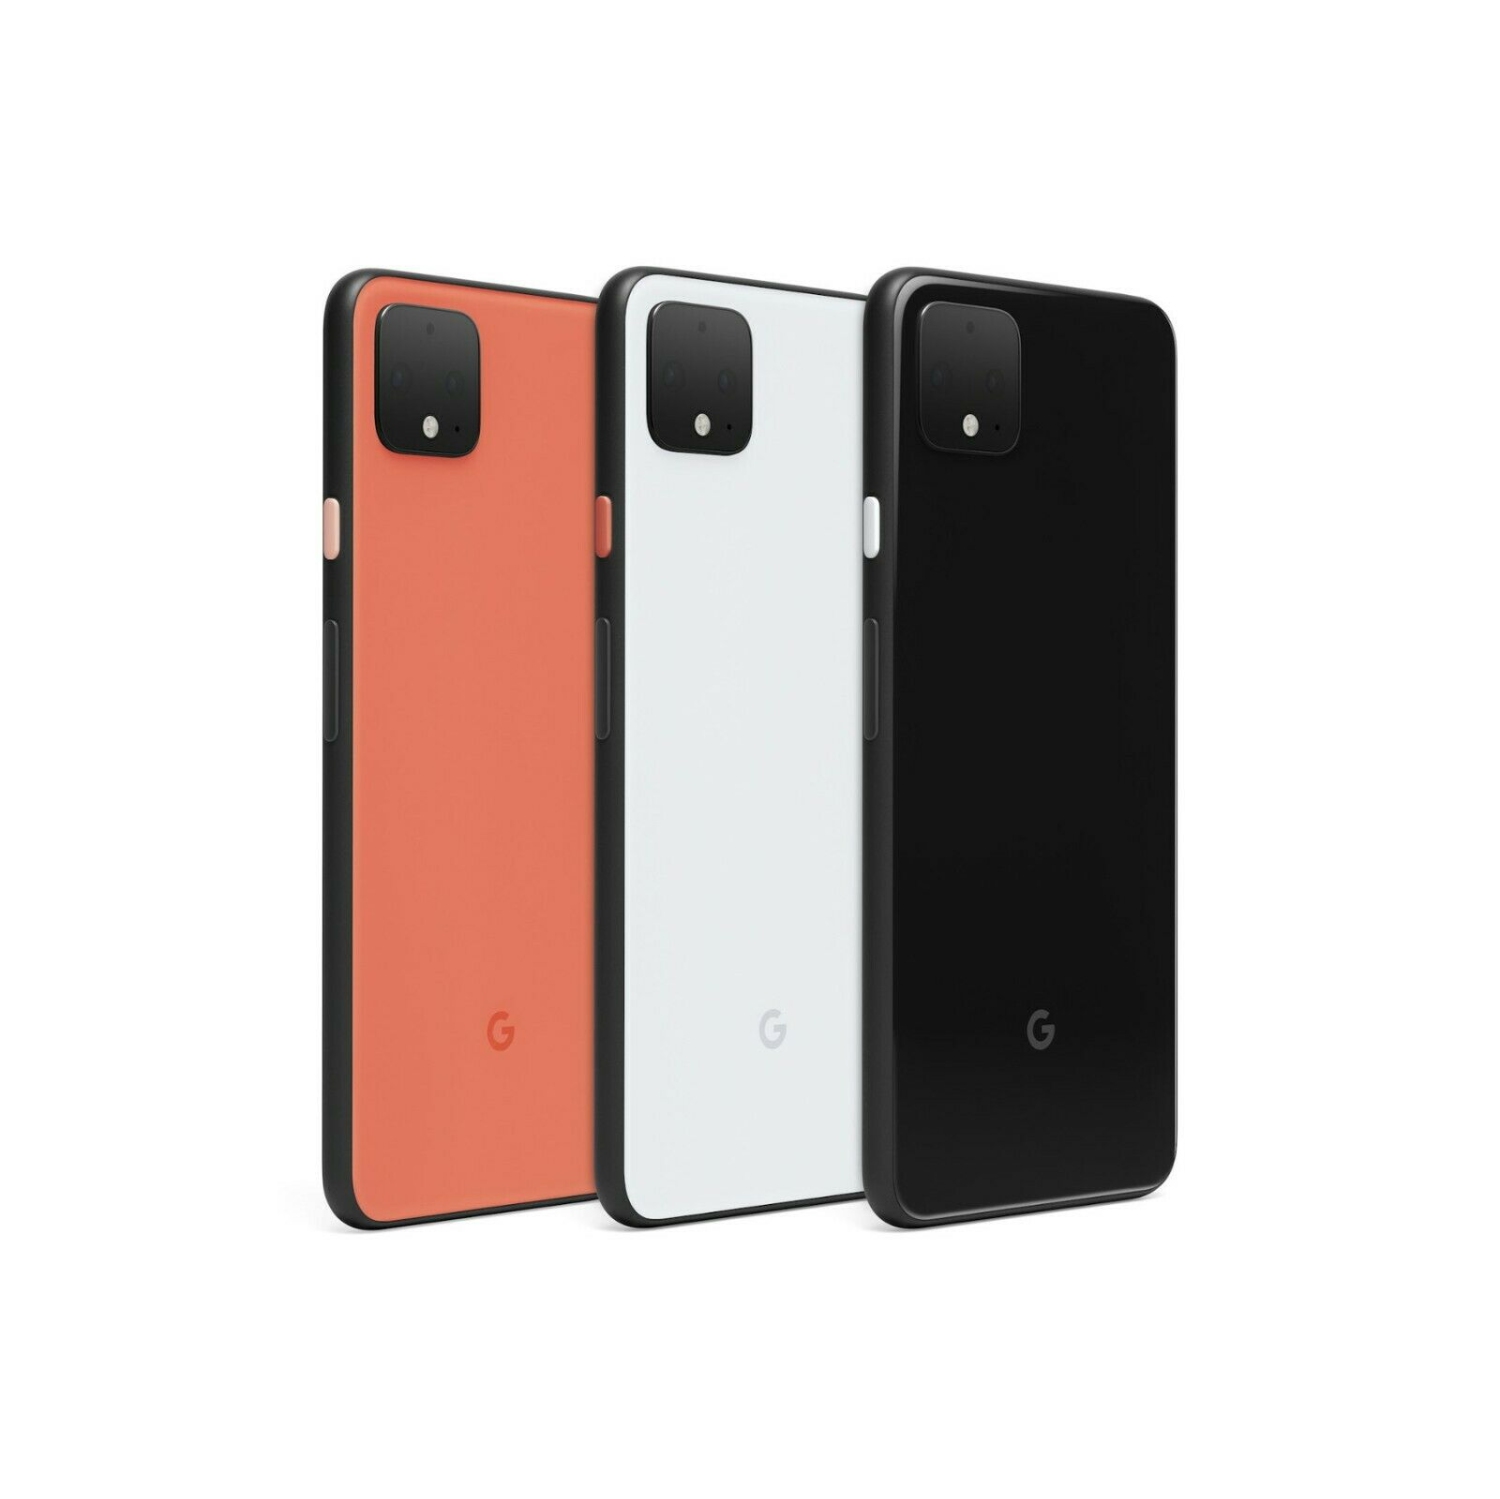 Google Pixel 4 XL 64GB Smartphone - Oh So Orange - Unlocked 